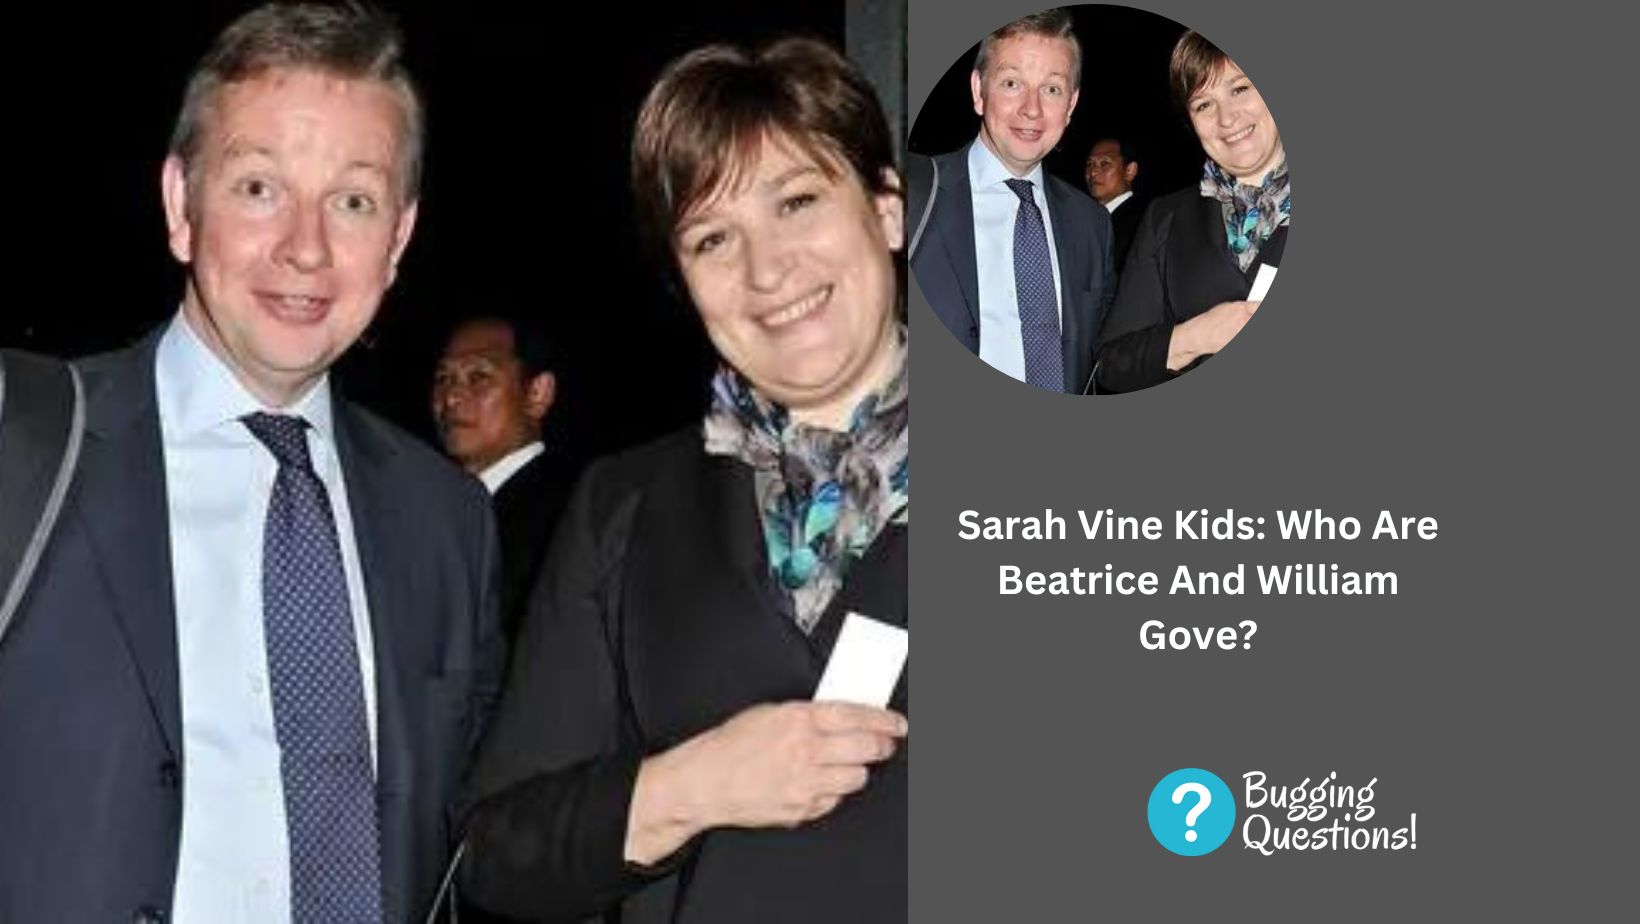 Sarah Vine Kids: Who Are Beatrice And William Gove?